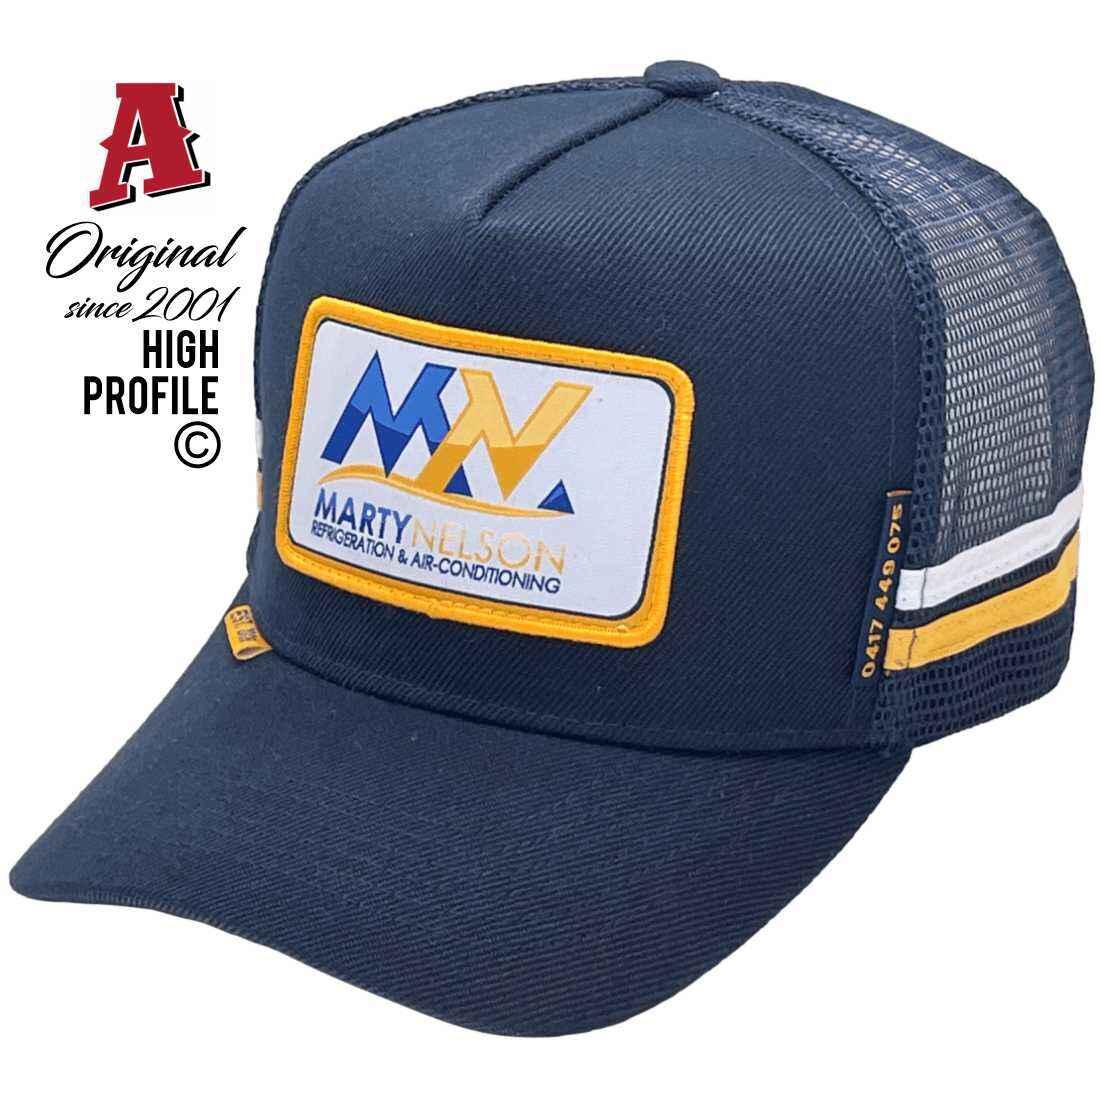 Marty Nelson Refrigeration Air Dubbo NSW Midrange Aussie Trucker Hats with Australian HeadFit Crown 2 SideBands Navy Snapback